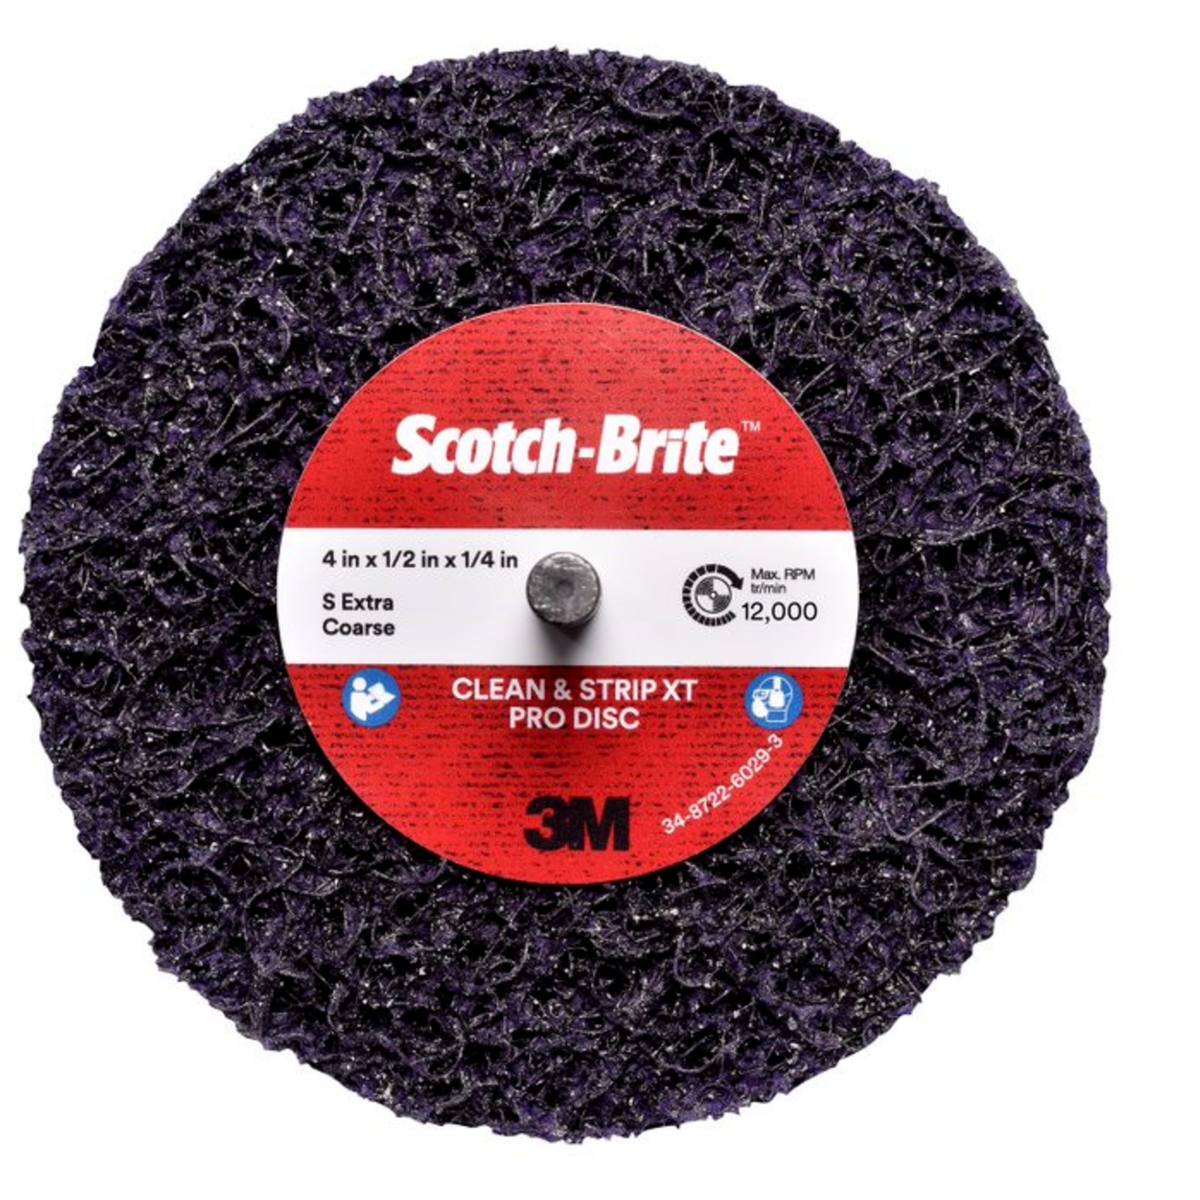 3M Scotch-Brite disco per pulizia grossolana XT-ZS Pro, 75 mm, 25 mm, 6 mm, S, extra grossolano